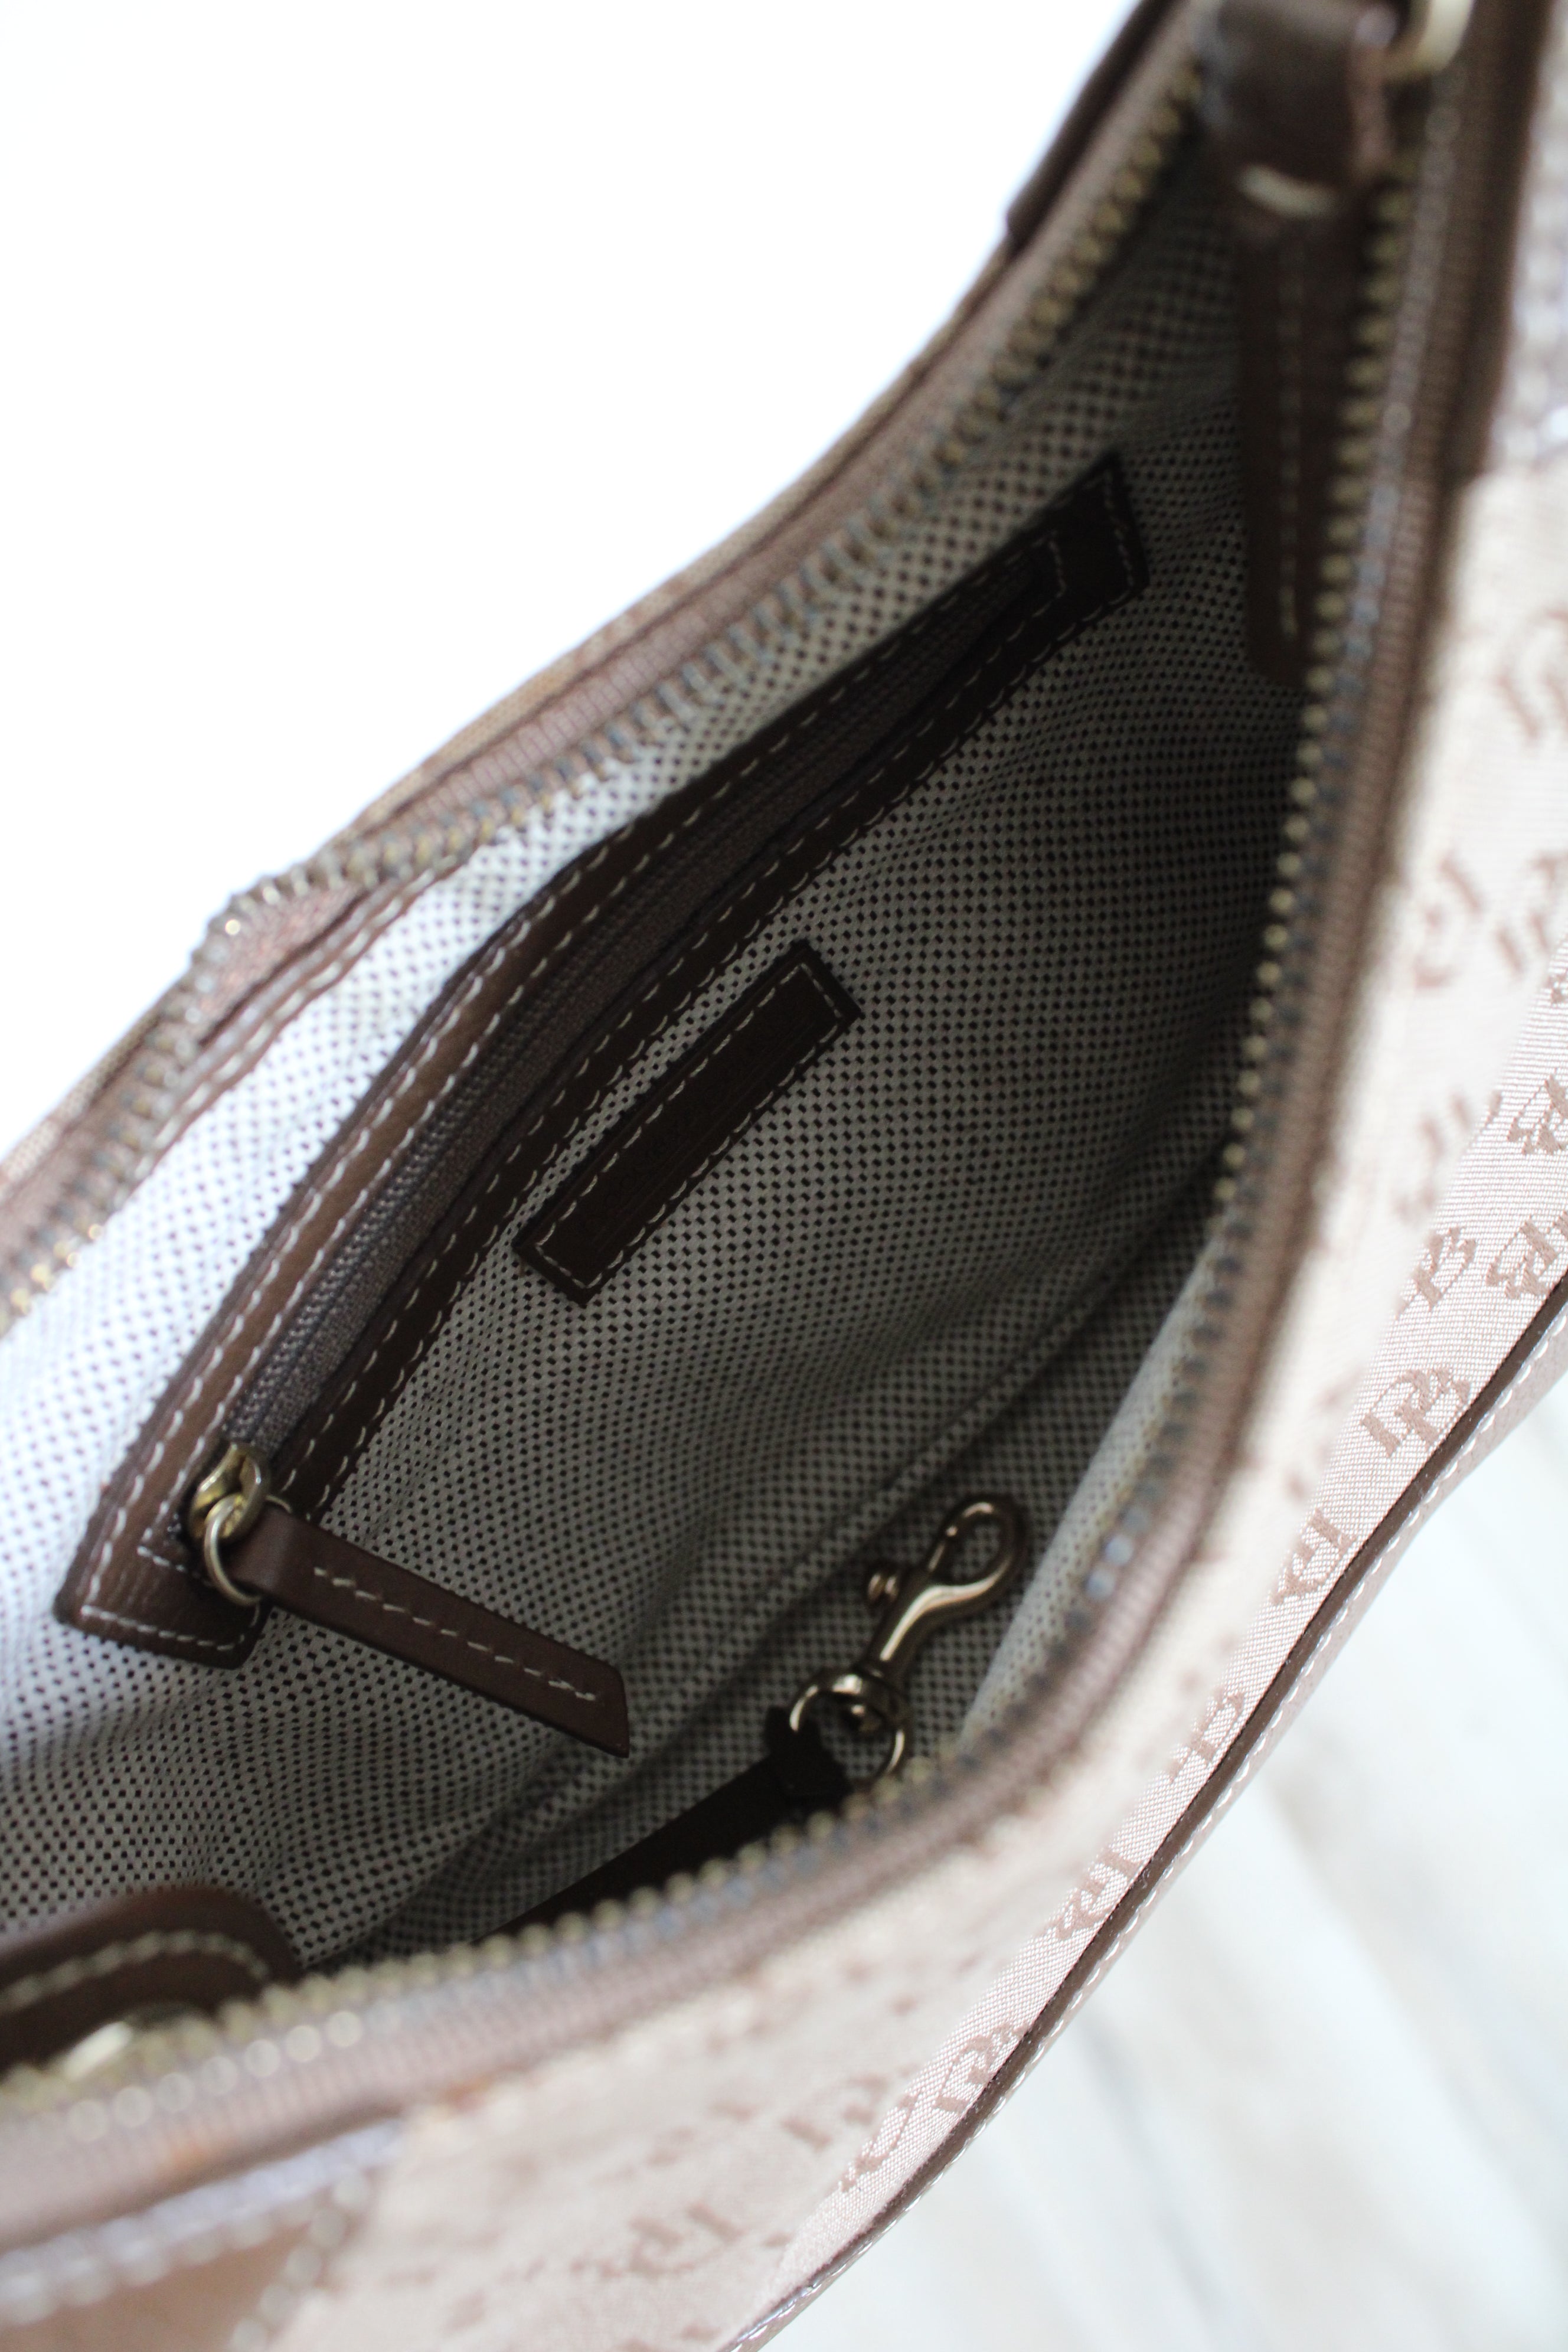 Dooney & Bourke Signature Canvas Leather Trim Shoulder Handbag